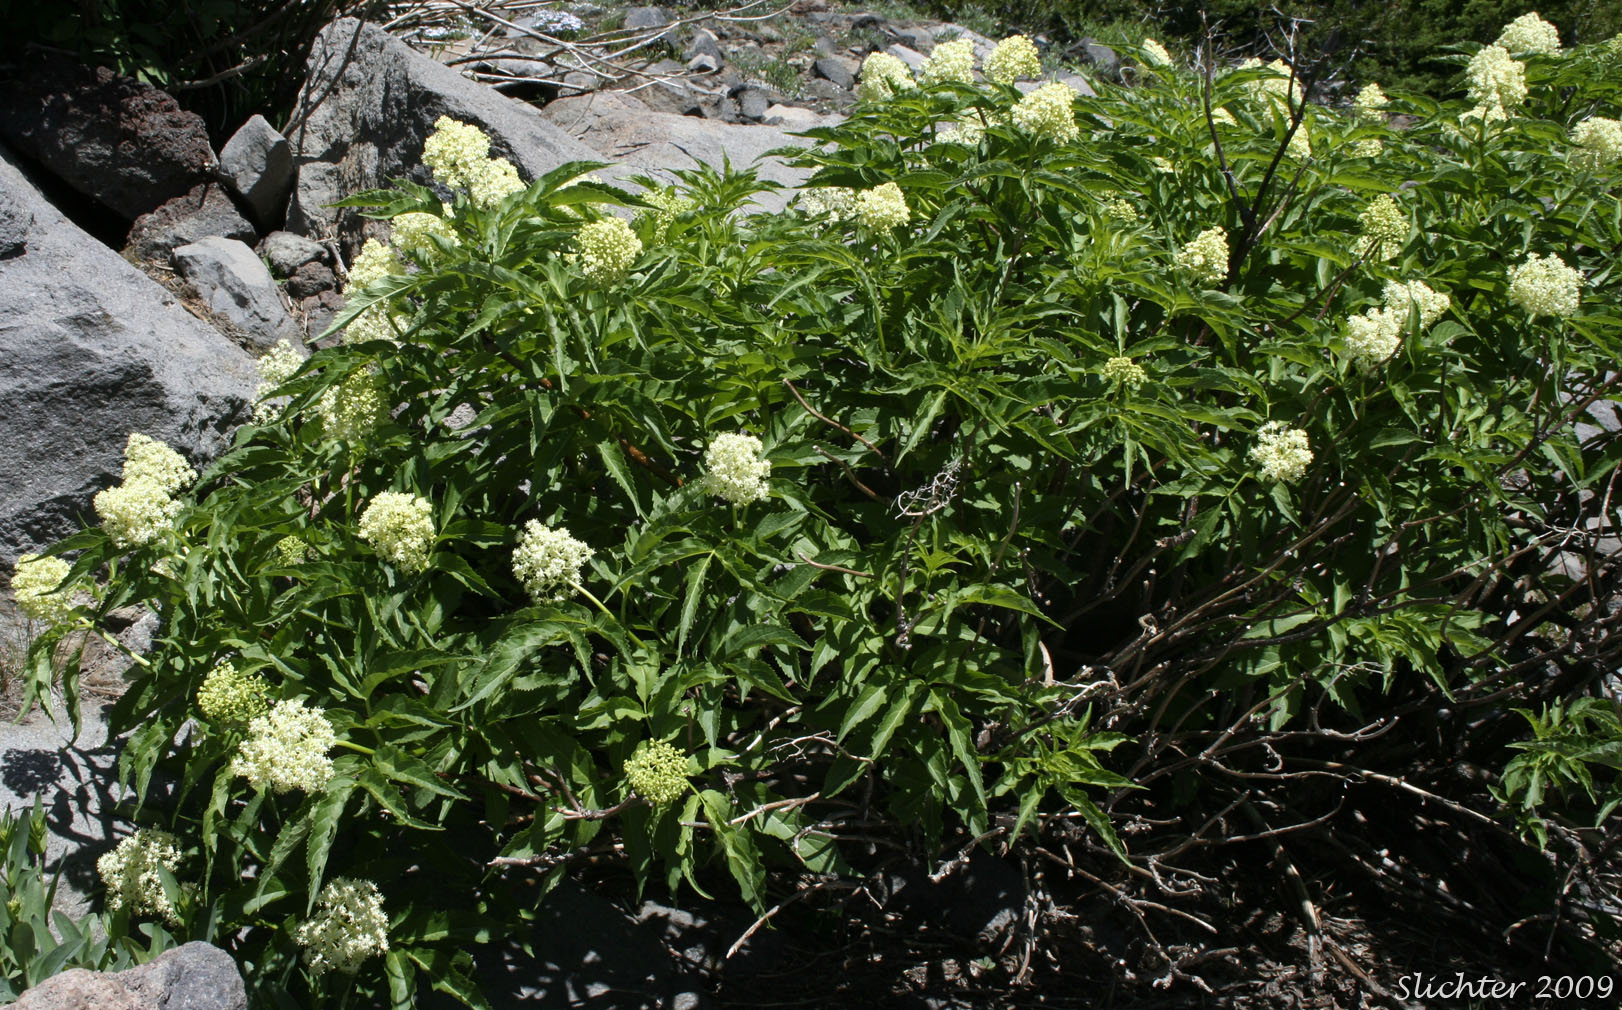 Black Elderberry, Rocky Mountain Elder: Sambucus racemosa var. melanocarpa (Synonyms: Sambucus racemosa ssp. pubens var. melanocarpa, Sambucus melanocarpa)